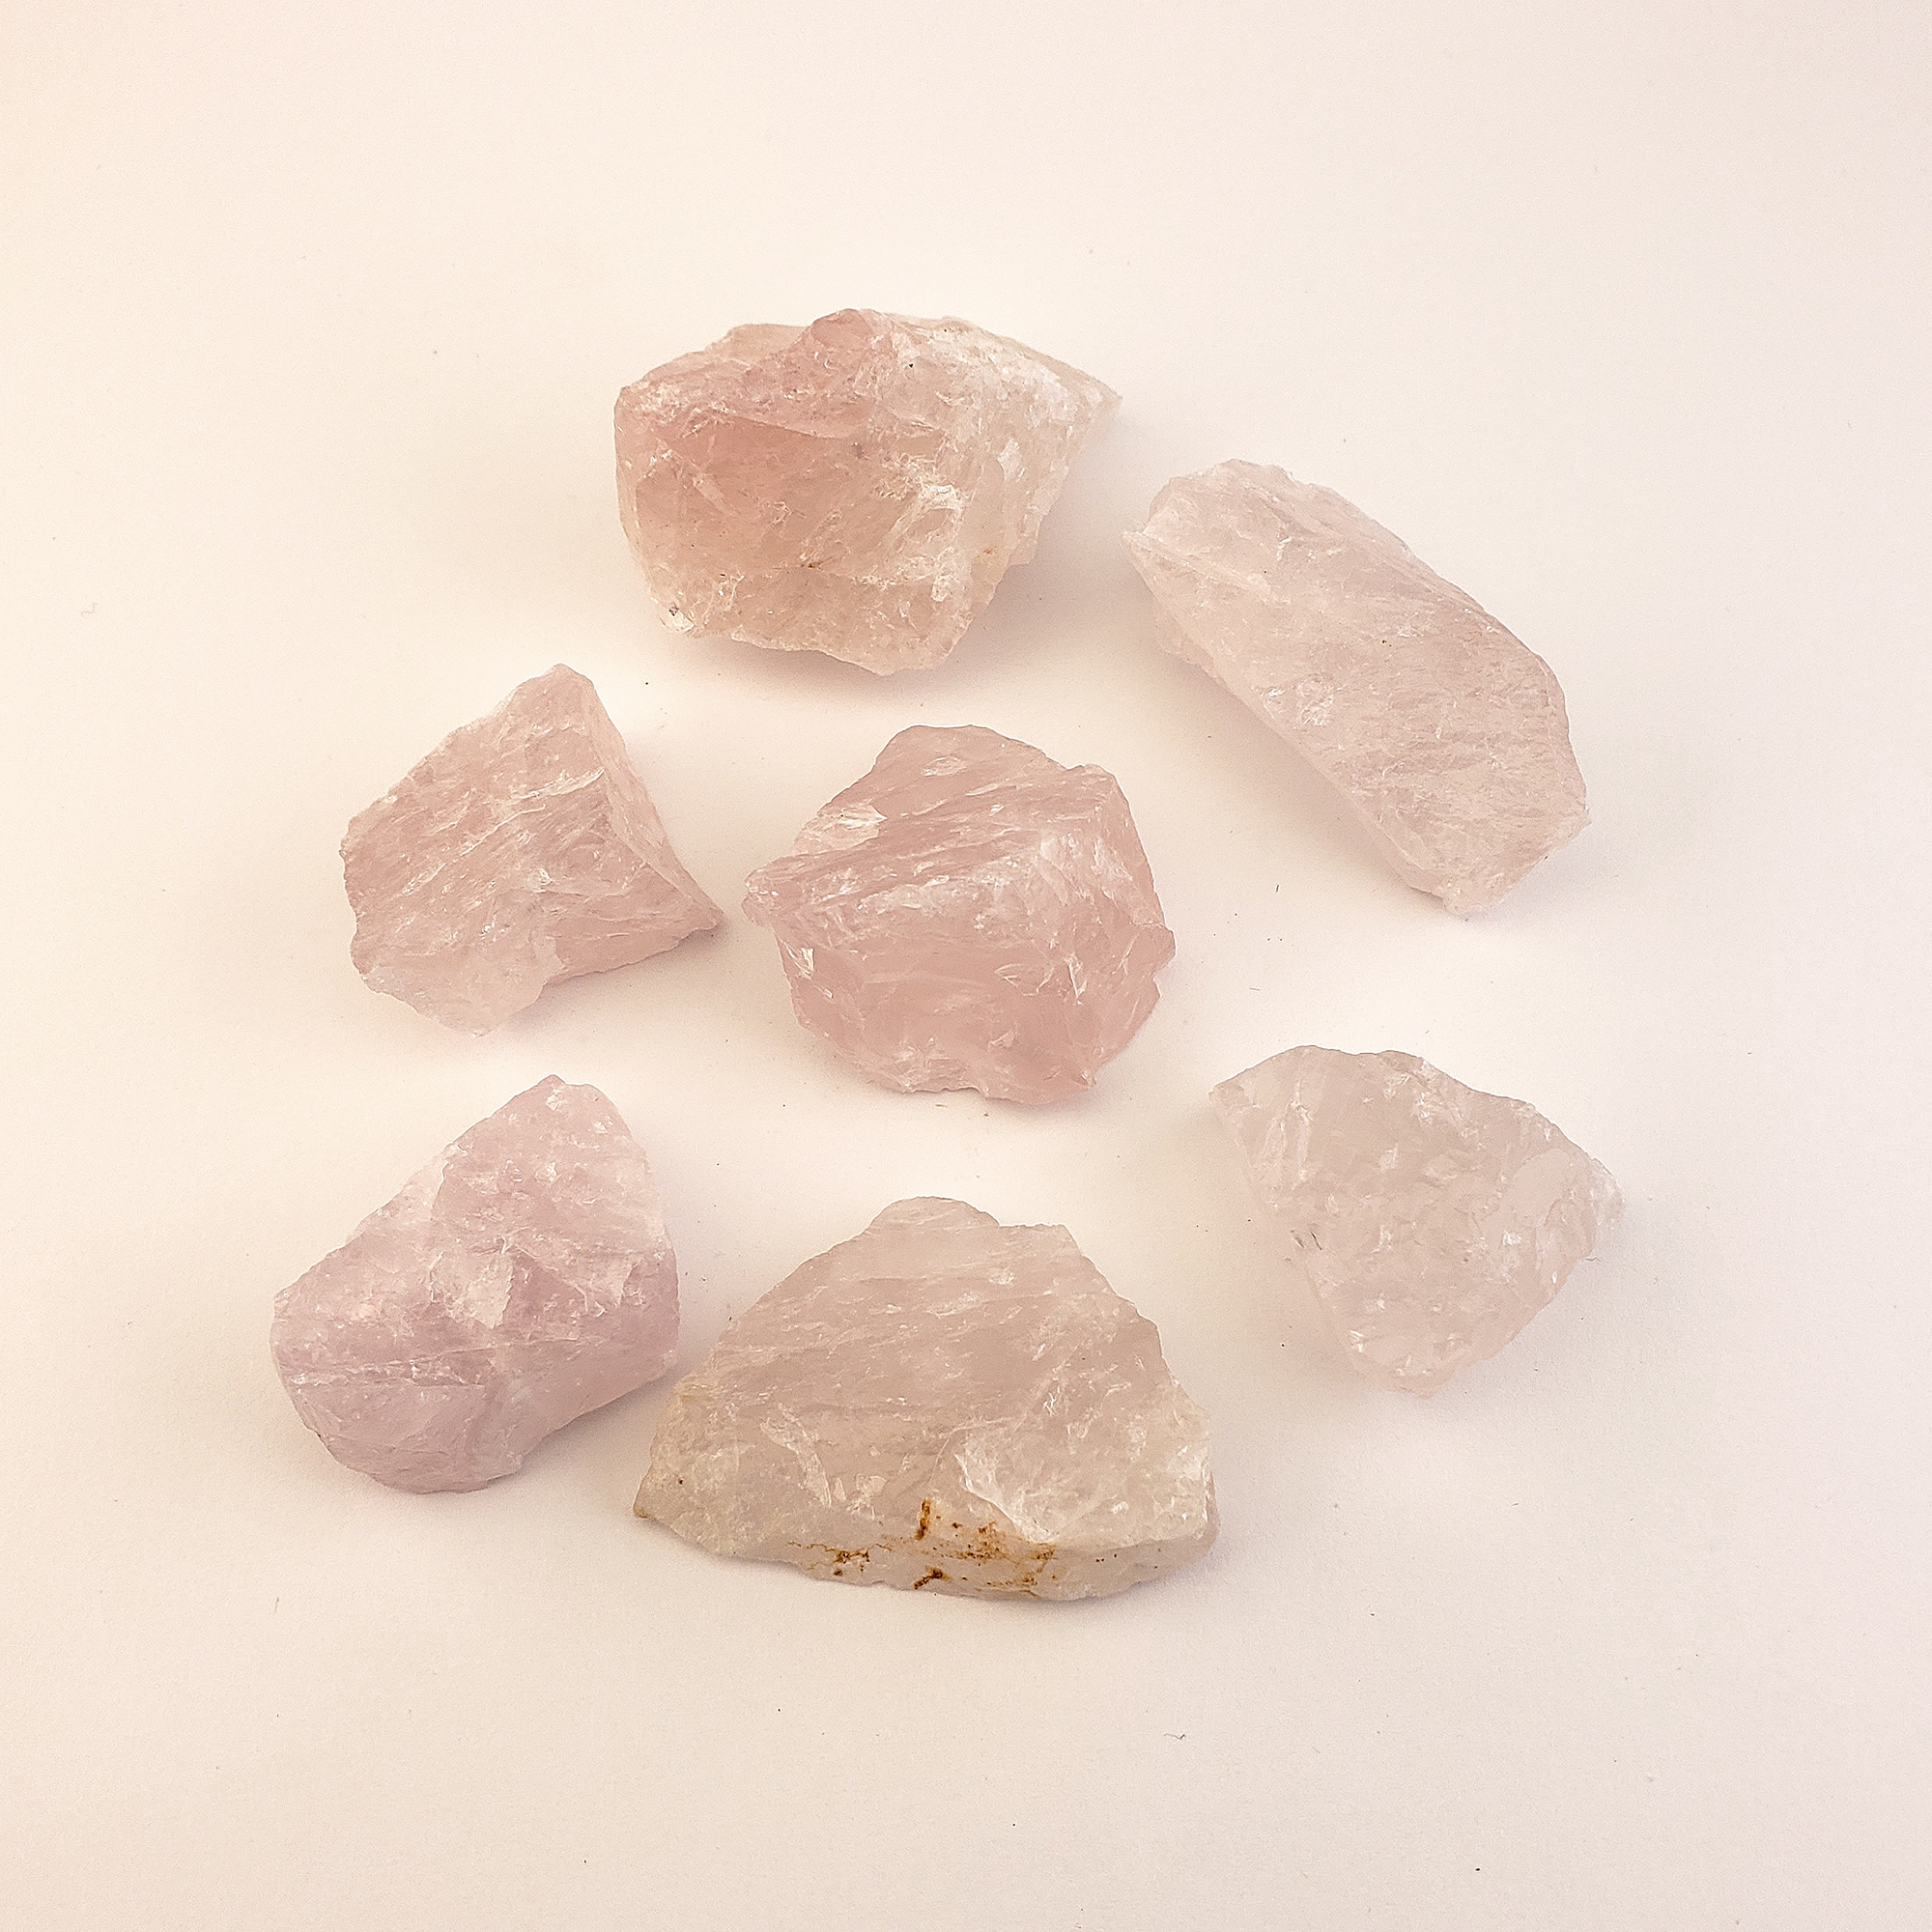 Rose Quartz Raw Crystal Rough Gemstone - Small One Stone - White Background 4